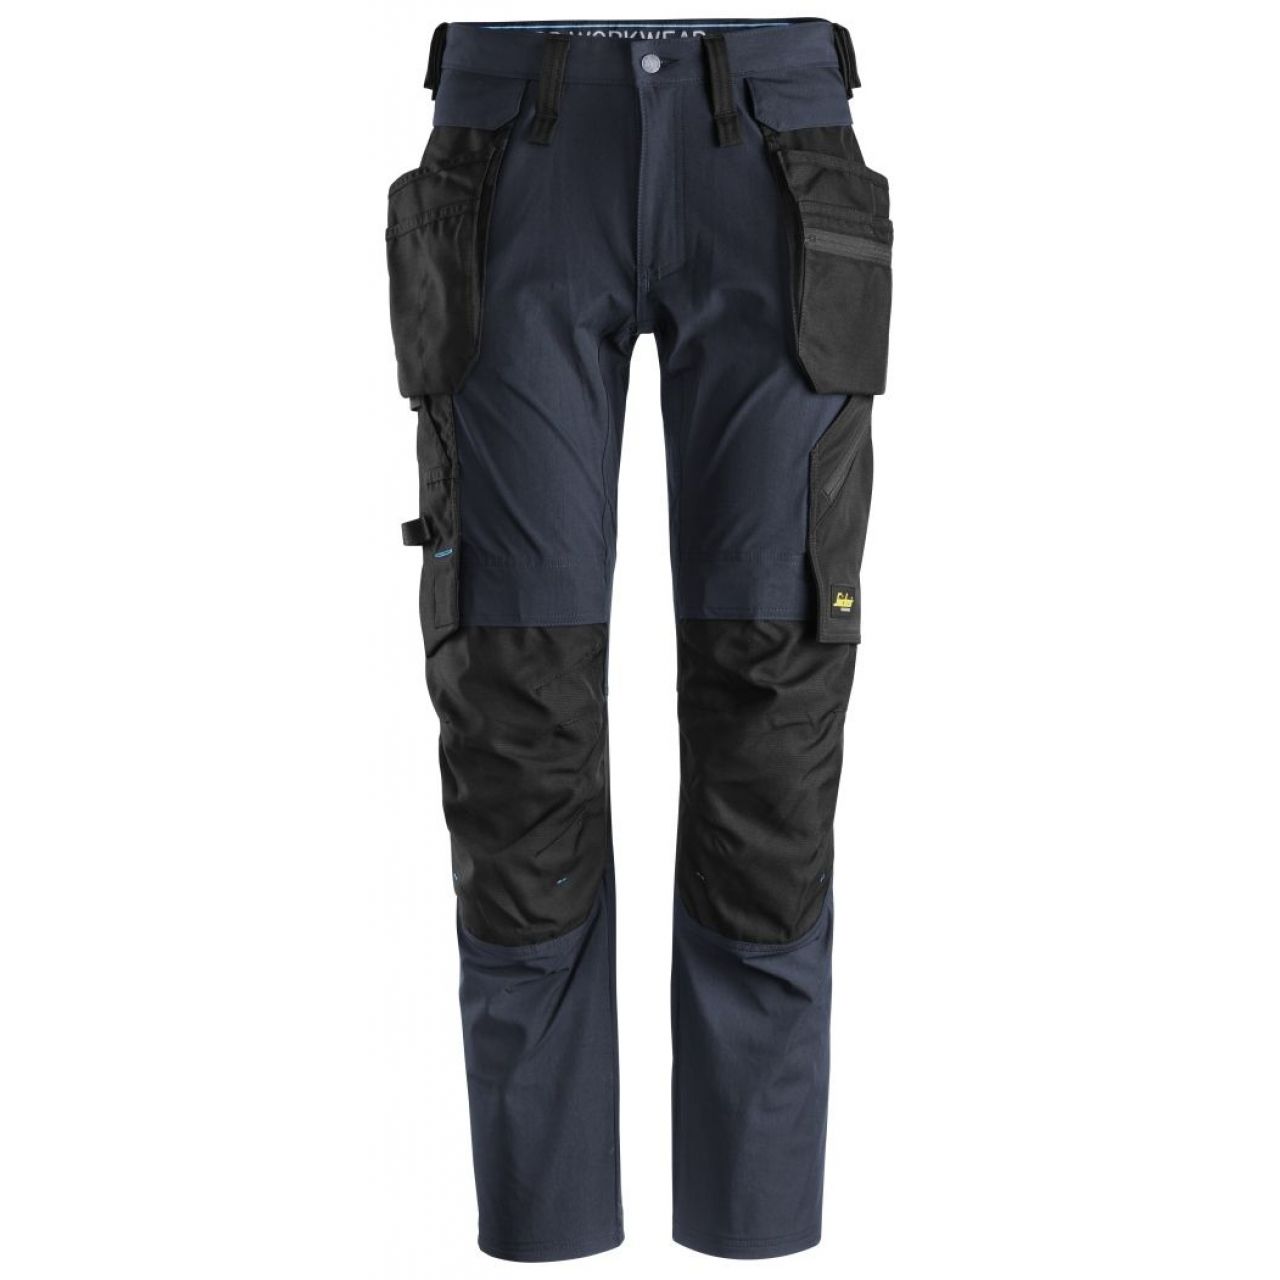 Pantalon + bolsillos flotantes desmontables LiteWork azul marino-negro talla 196